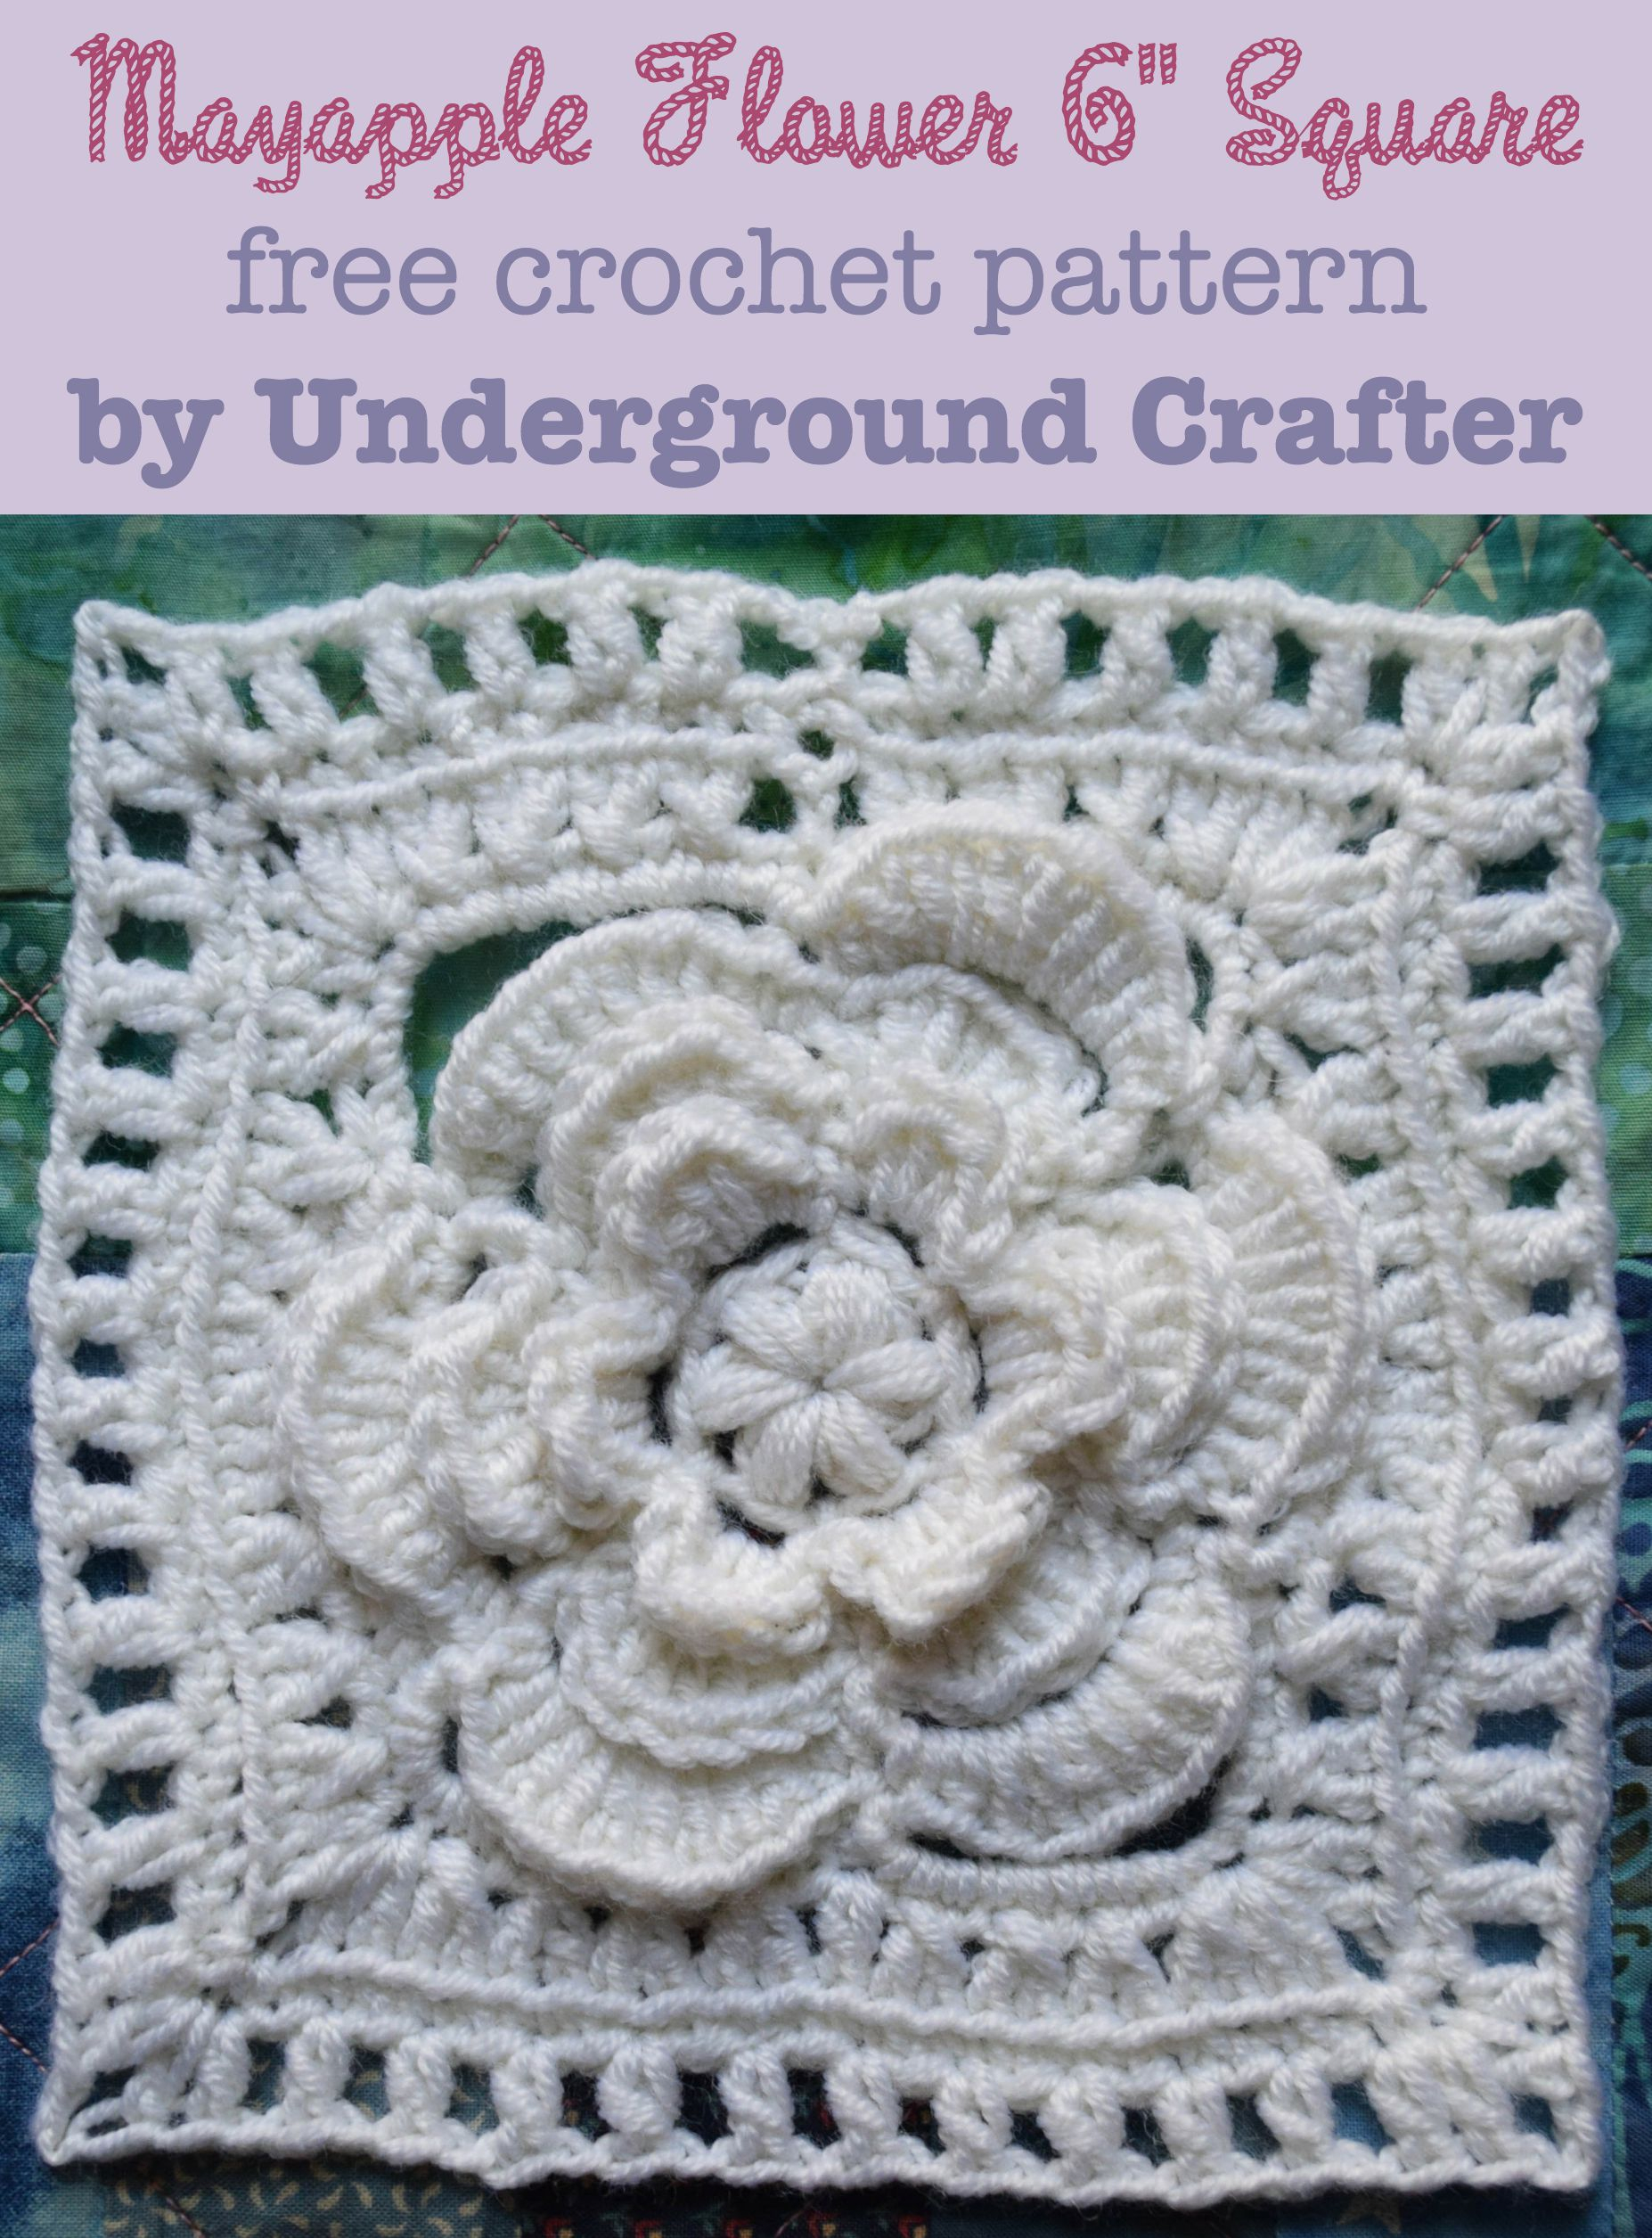 12 Granny Square Crochet Pattern Crochet Pattern Mayapple Flower Square Underground Crafter